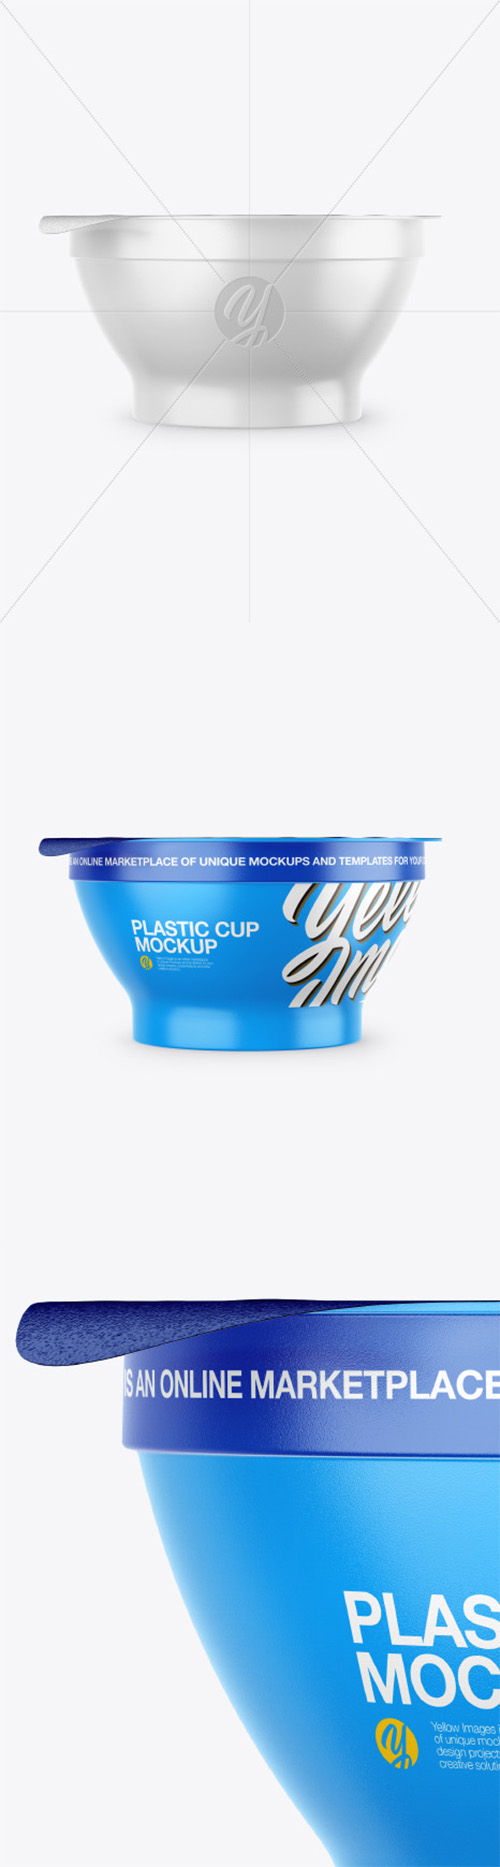 Plastic Yogurt Cup with Foil Lid Mockup 52450 TIF